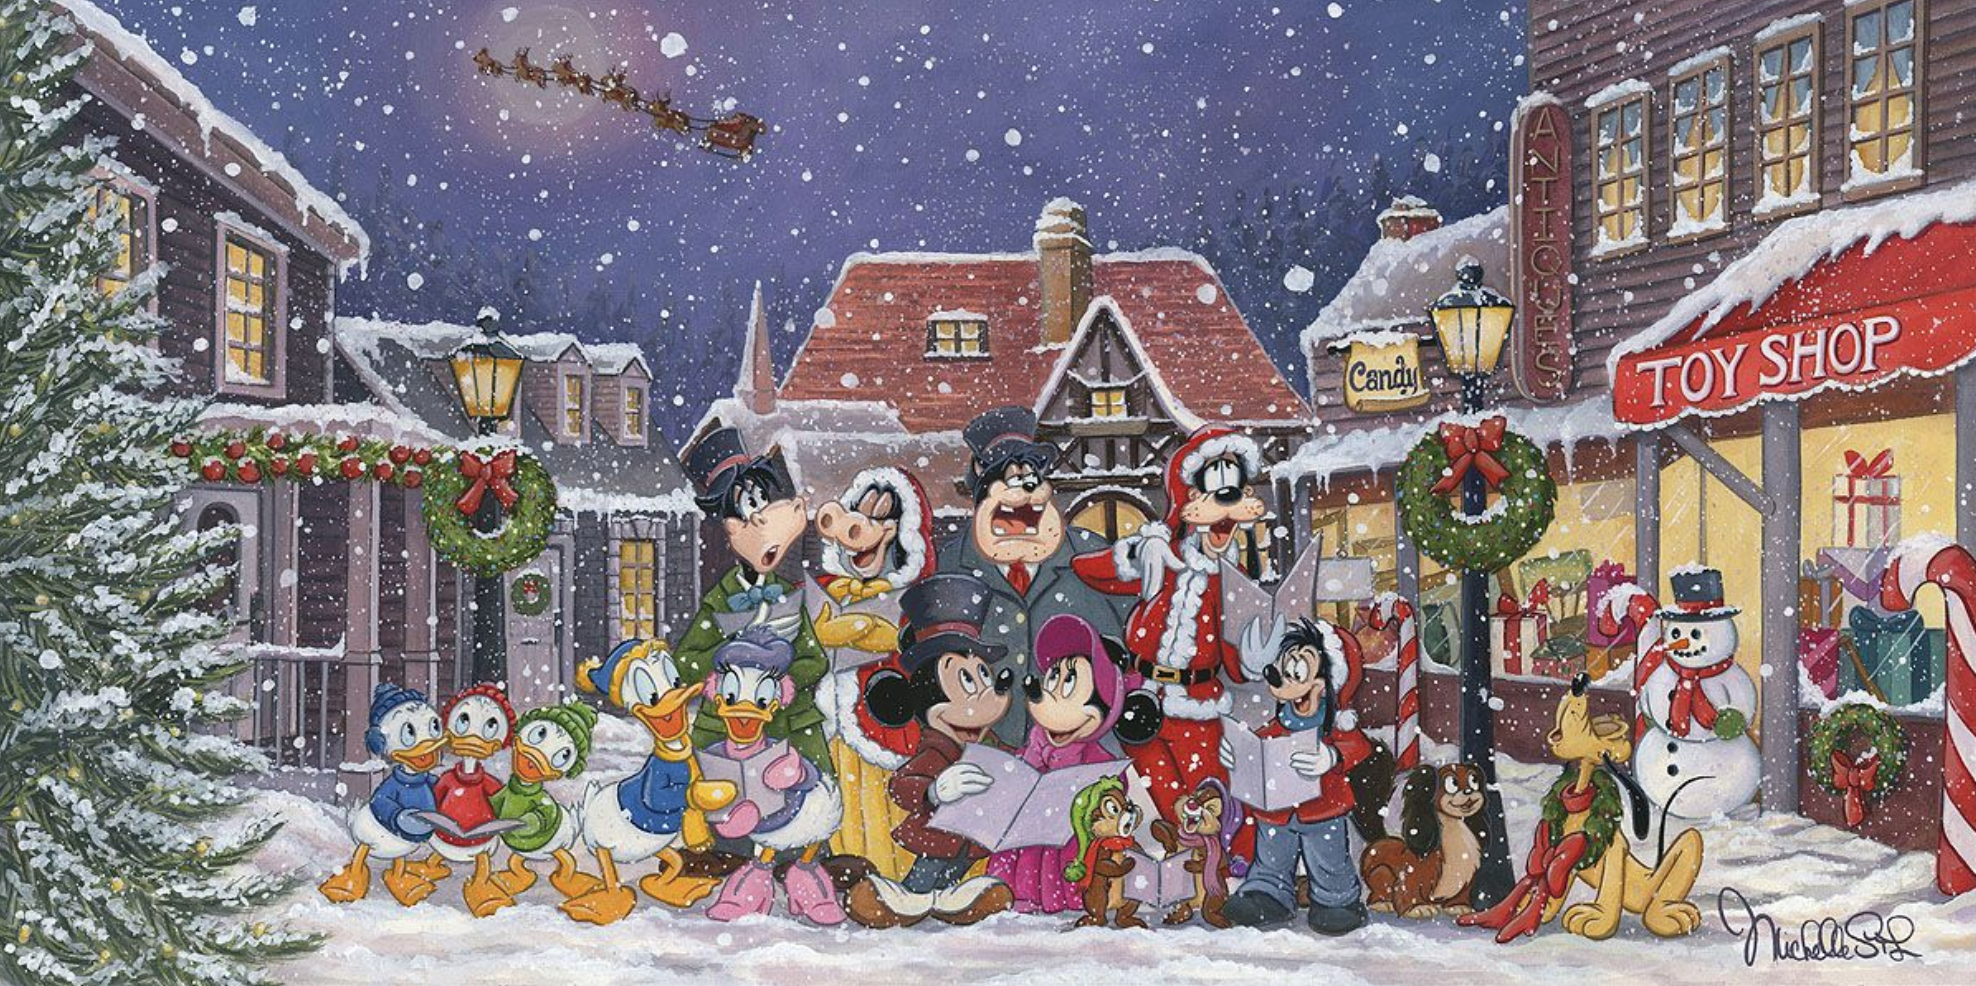 A Snowy Christmas Carol Disney Christmas Art Giclee Michelle St Laurent